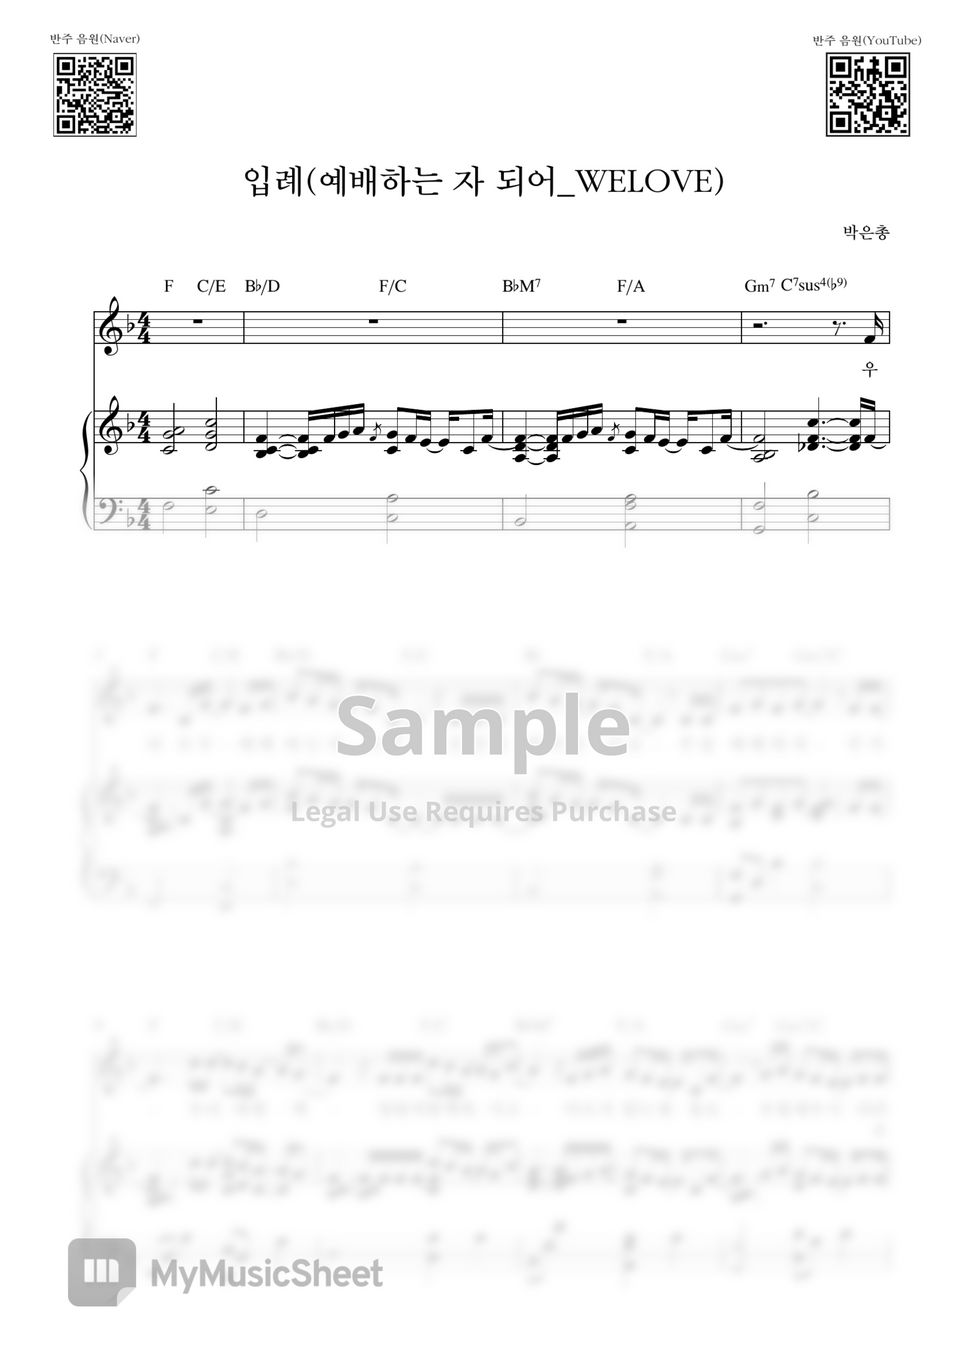 WELOVE - 입례(예배하는 자 되어) (Piano Cover) by Samuel Park